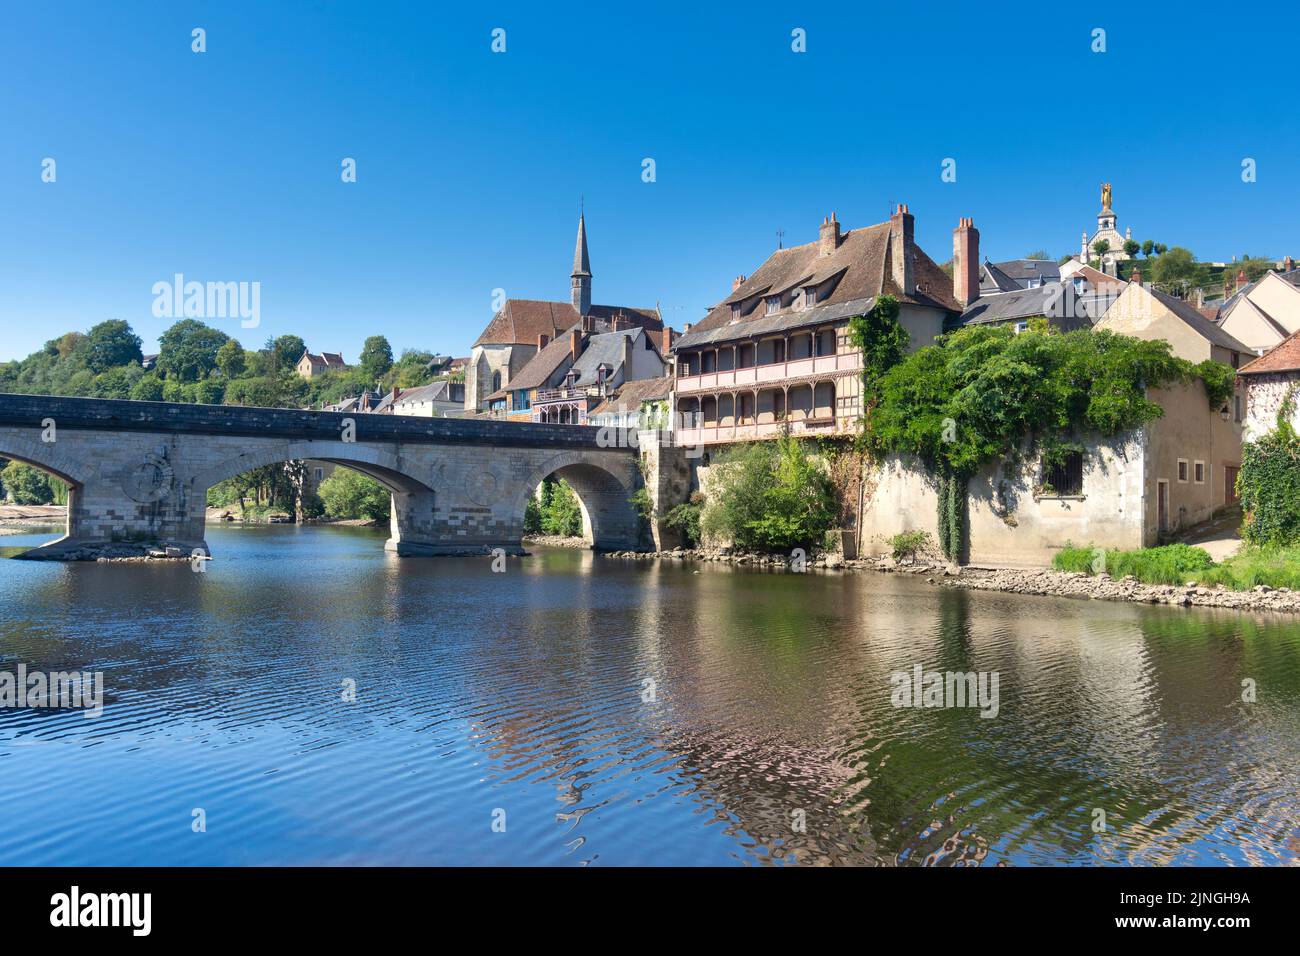 Arched stone bridge across the river Creuse in Argenton-sur-Creuse, Indre (36), France. Stock Photo